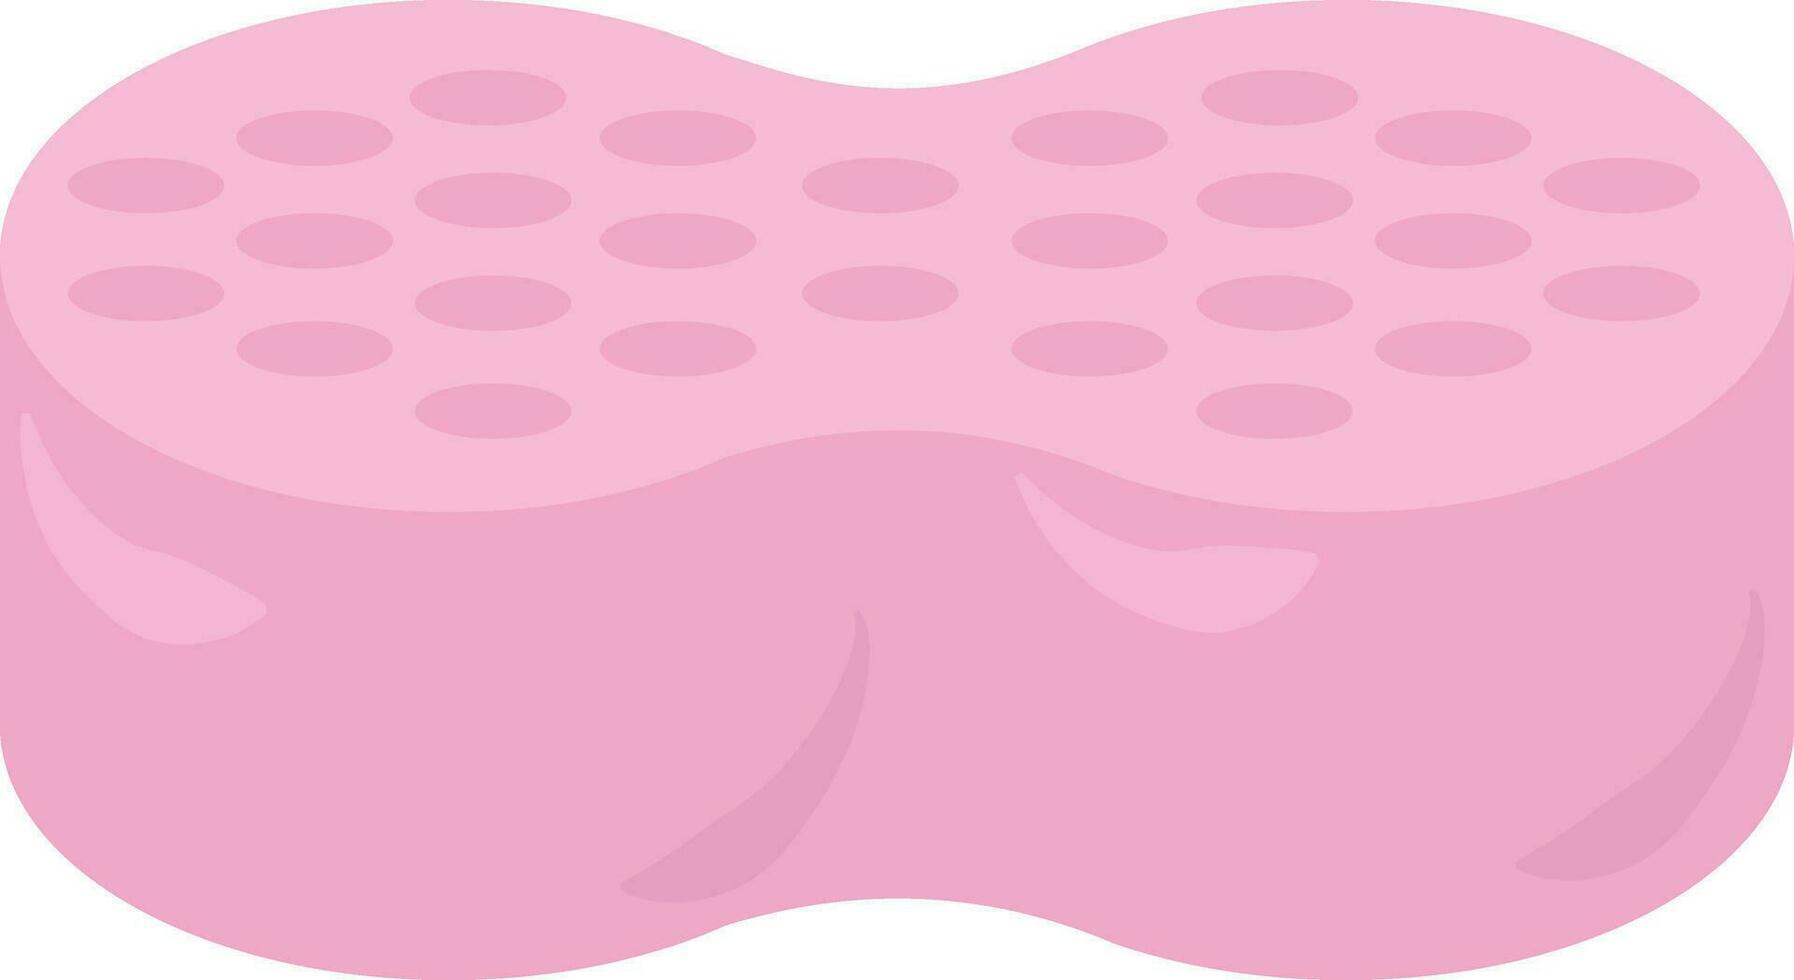 Bath pink sponge, illustration, vector on white background.